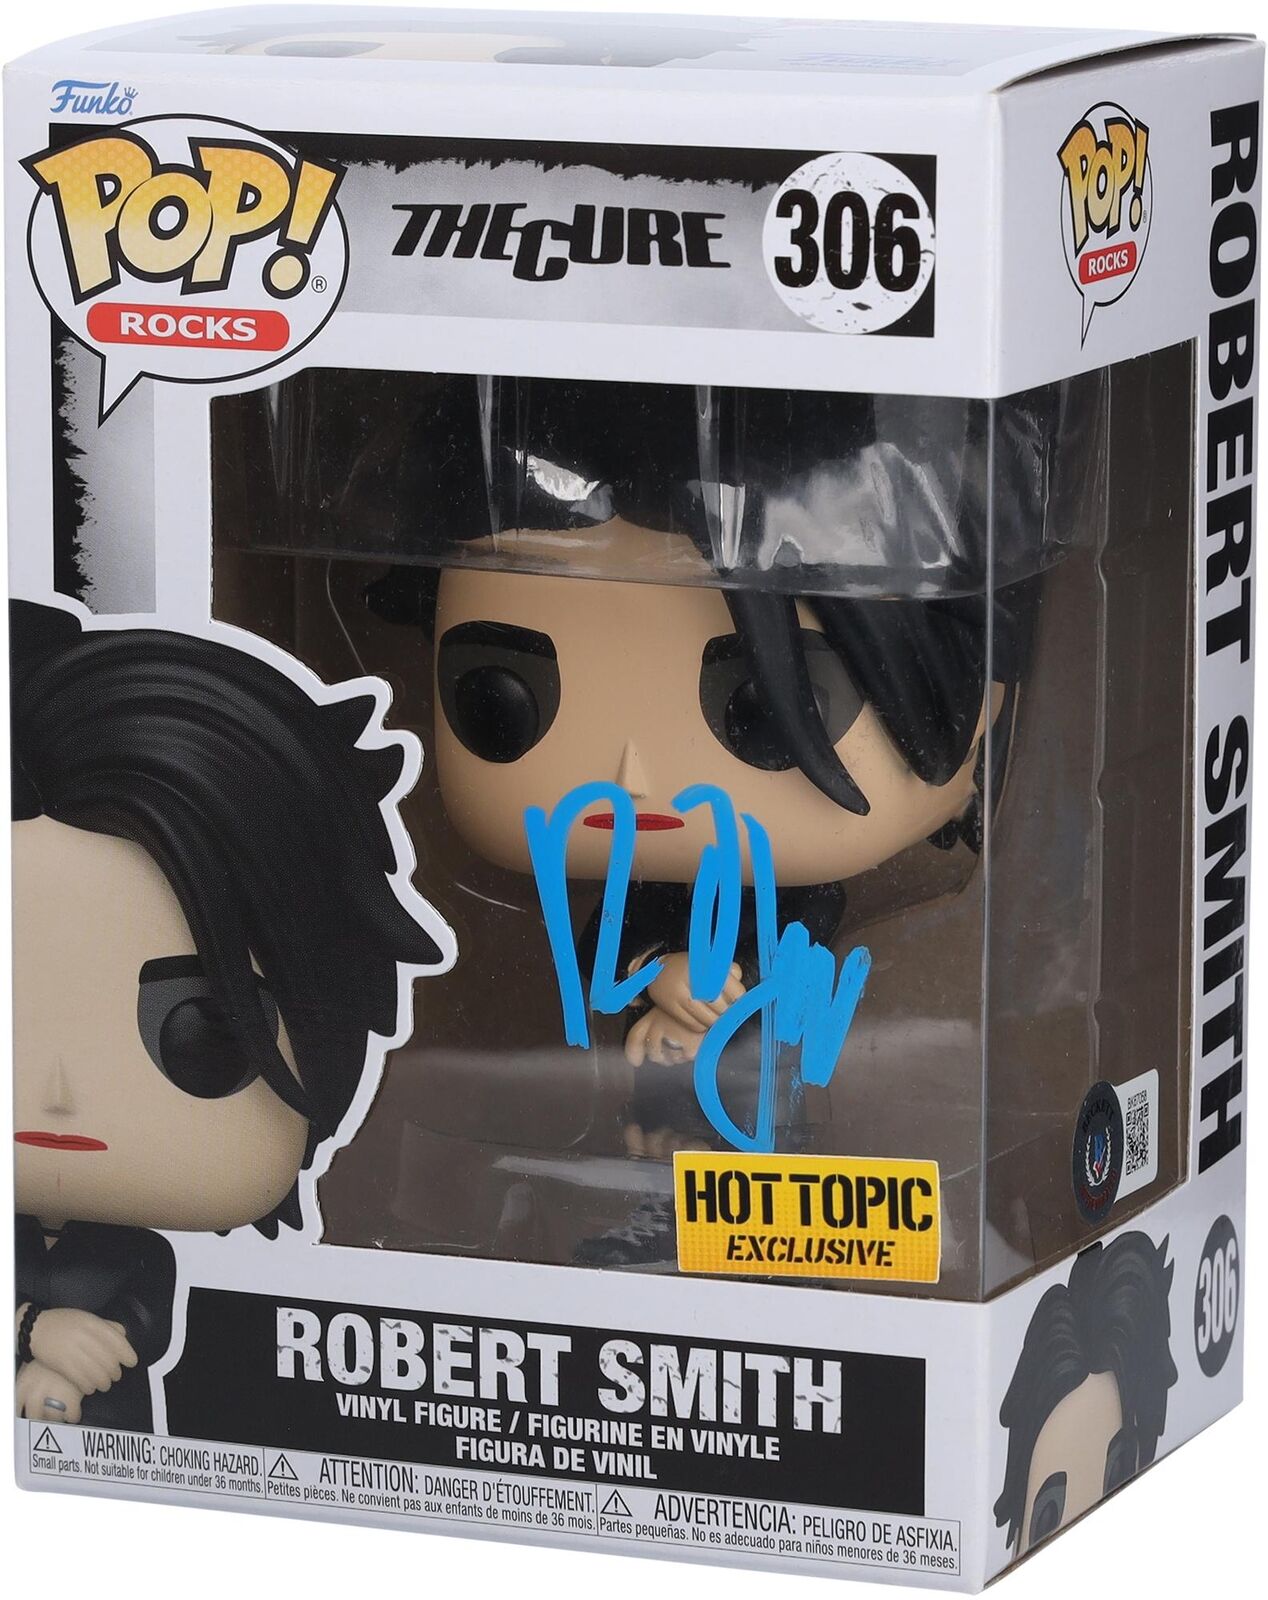 Robert Smith (Musician) The Cure Figurine